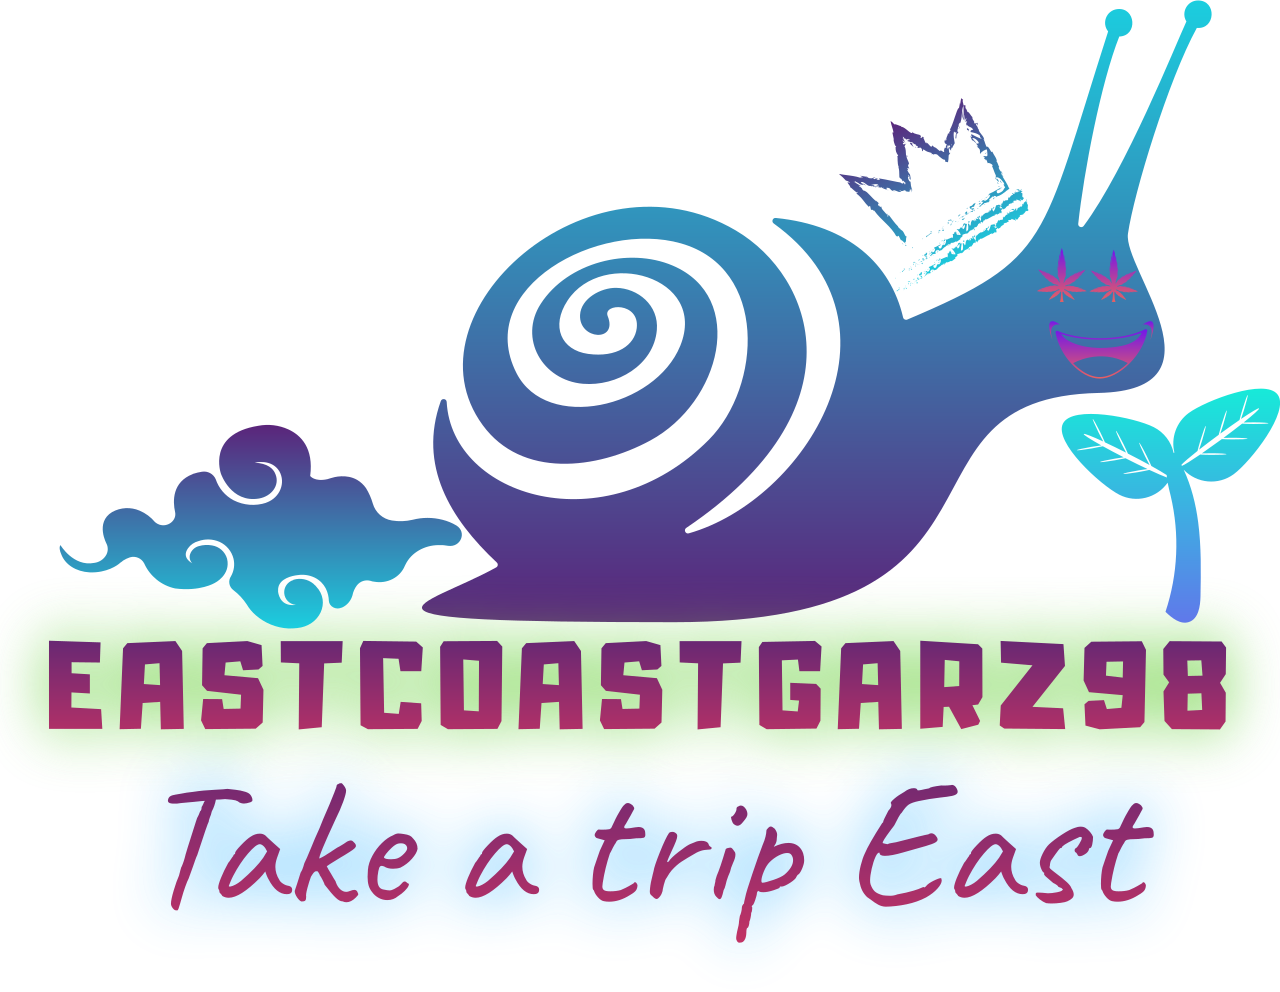 eastcoastgarz98's web page